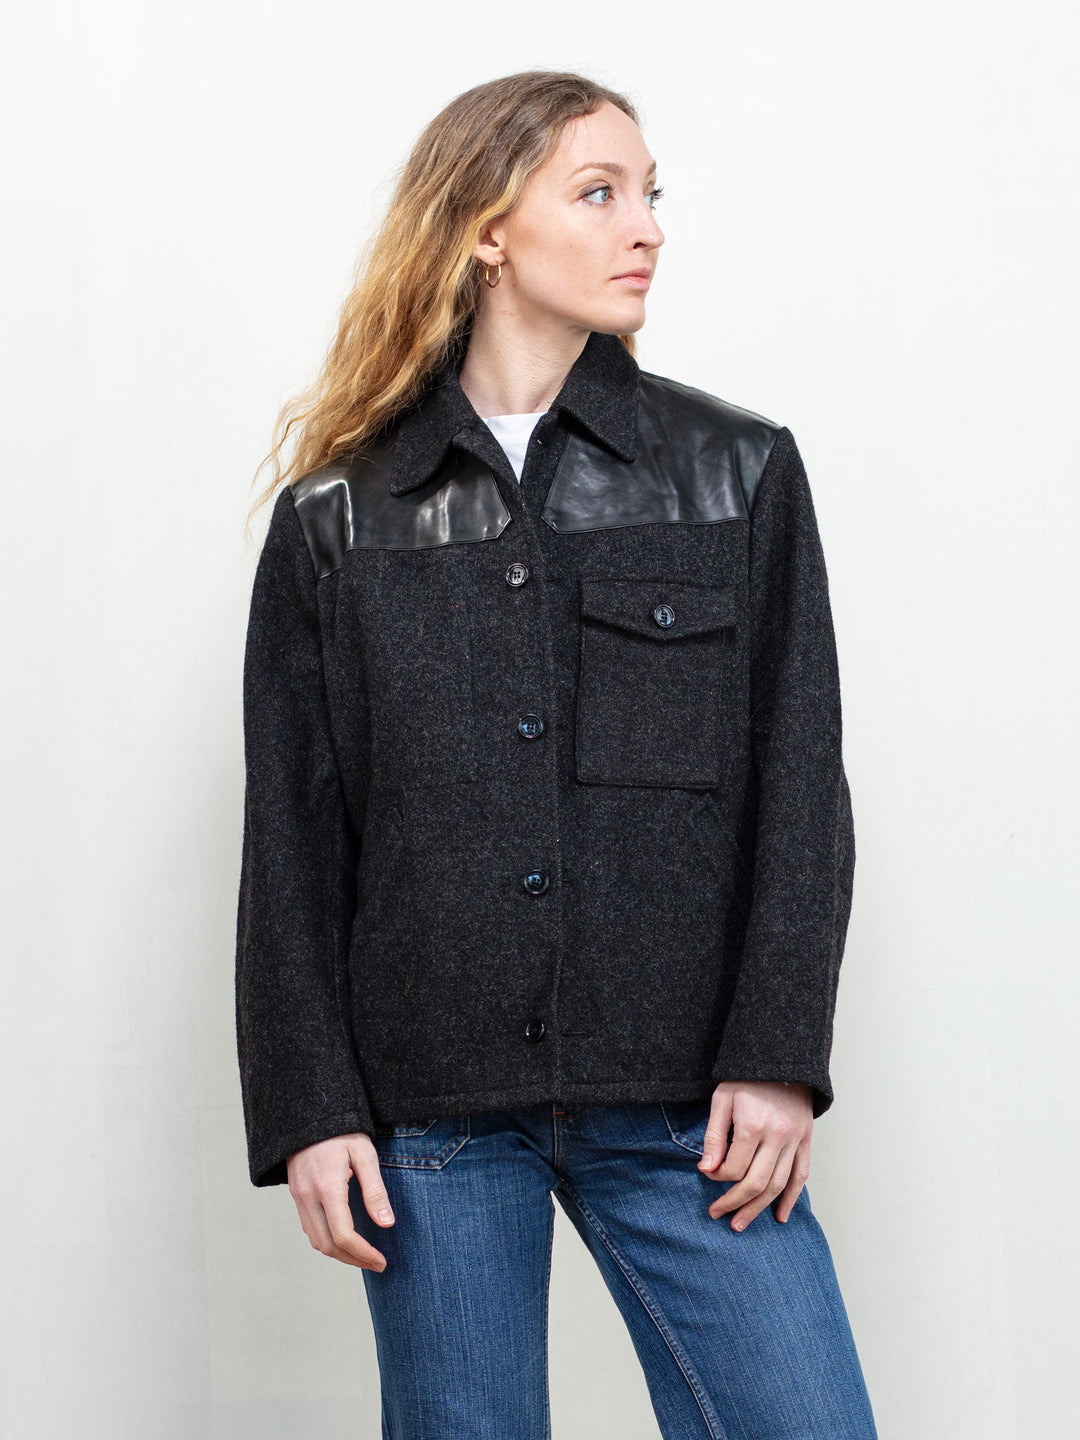 Black Wool Jacket vintage women outerwear wool blend blazer jacket pvc shoulders warm spring jacket northern girl store clothing size large